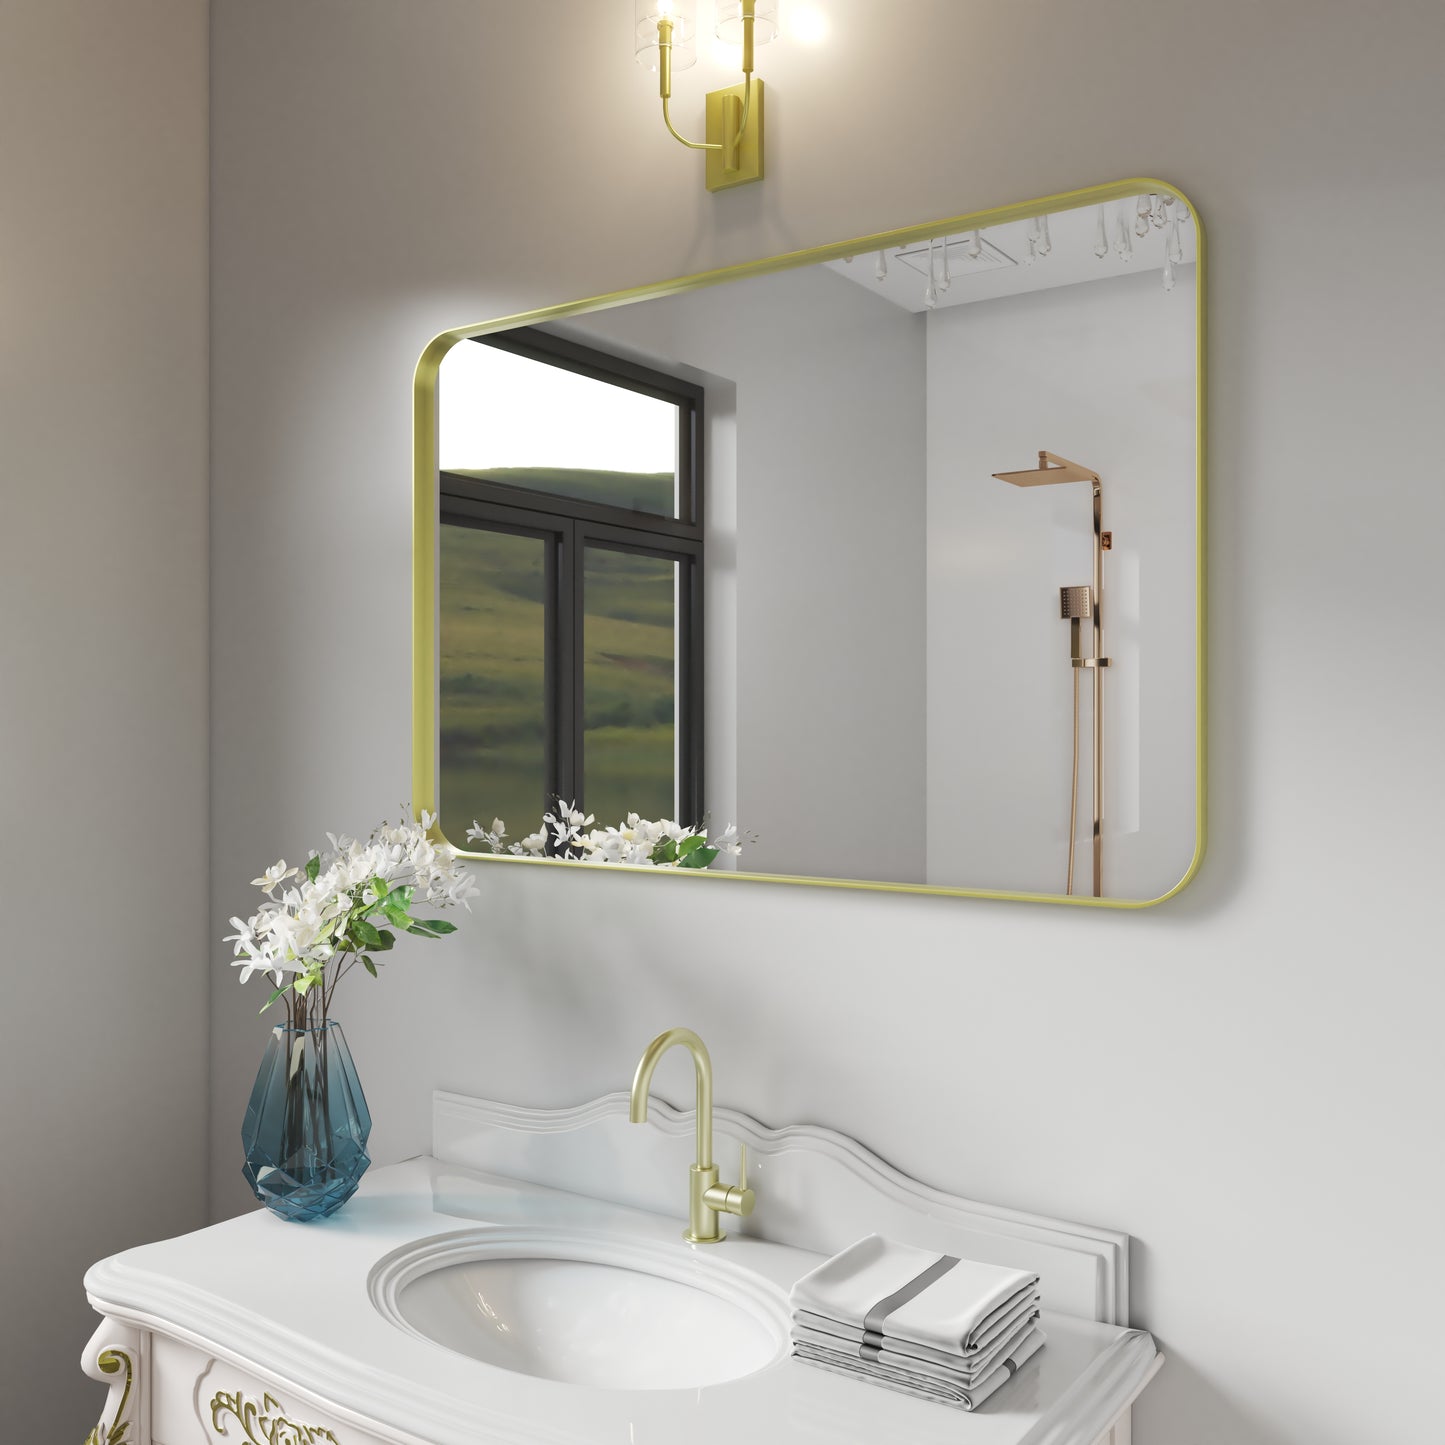 Square Framed Bathroom Wall Mirrors Aluminum Frame (Horizontal/Vertical)